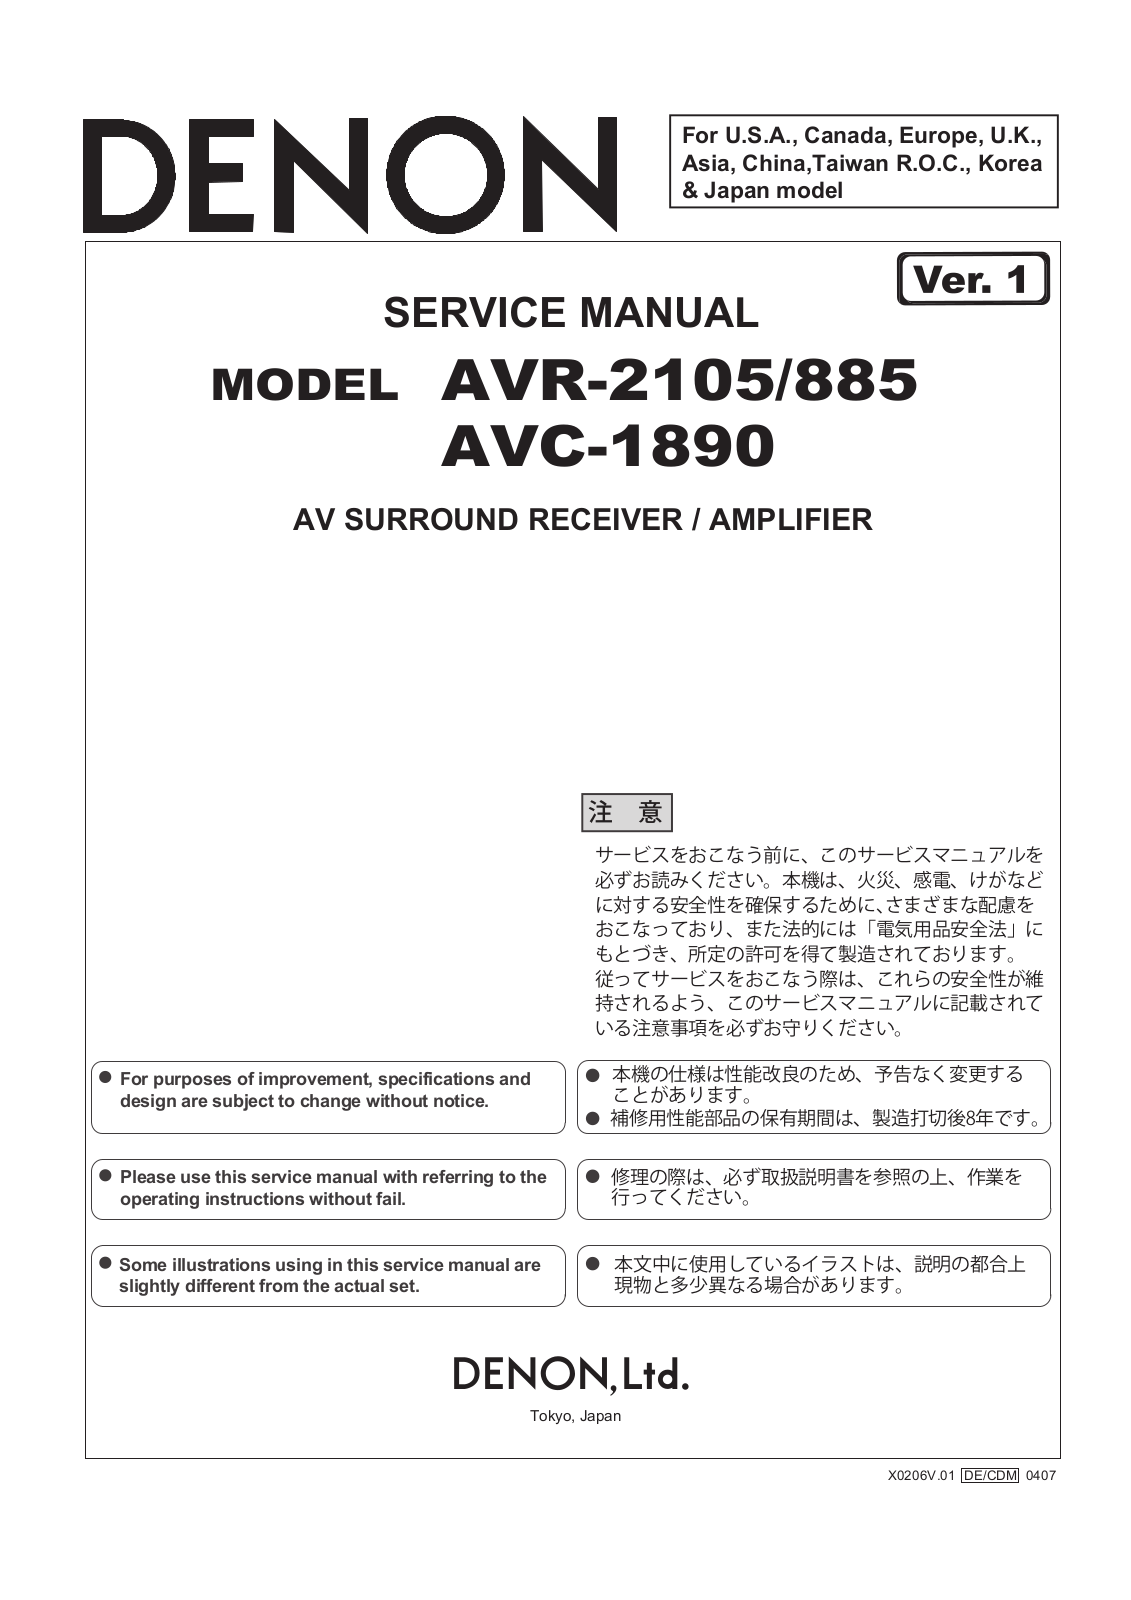 Denon AVR-2105 Service Manual